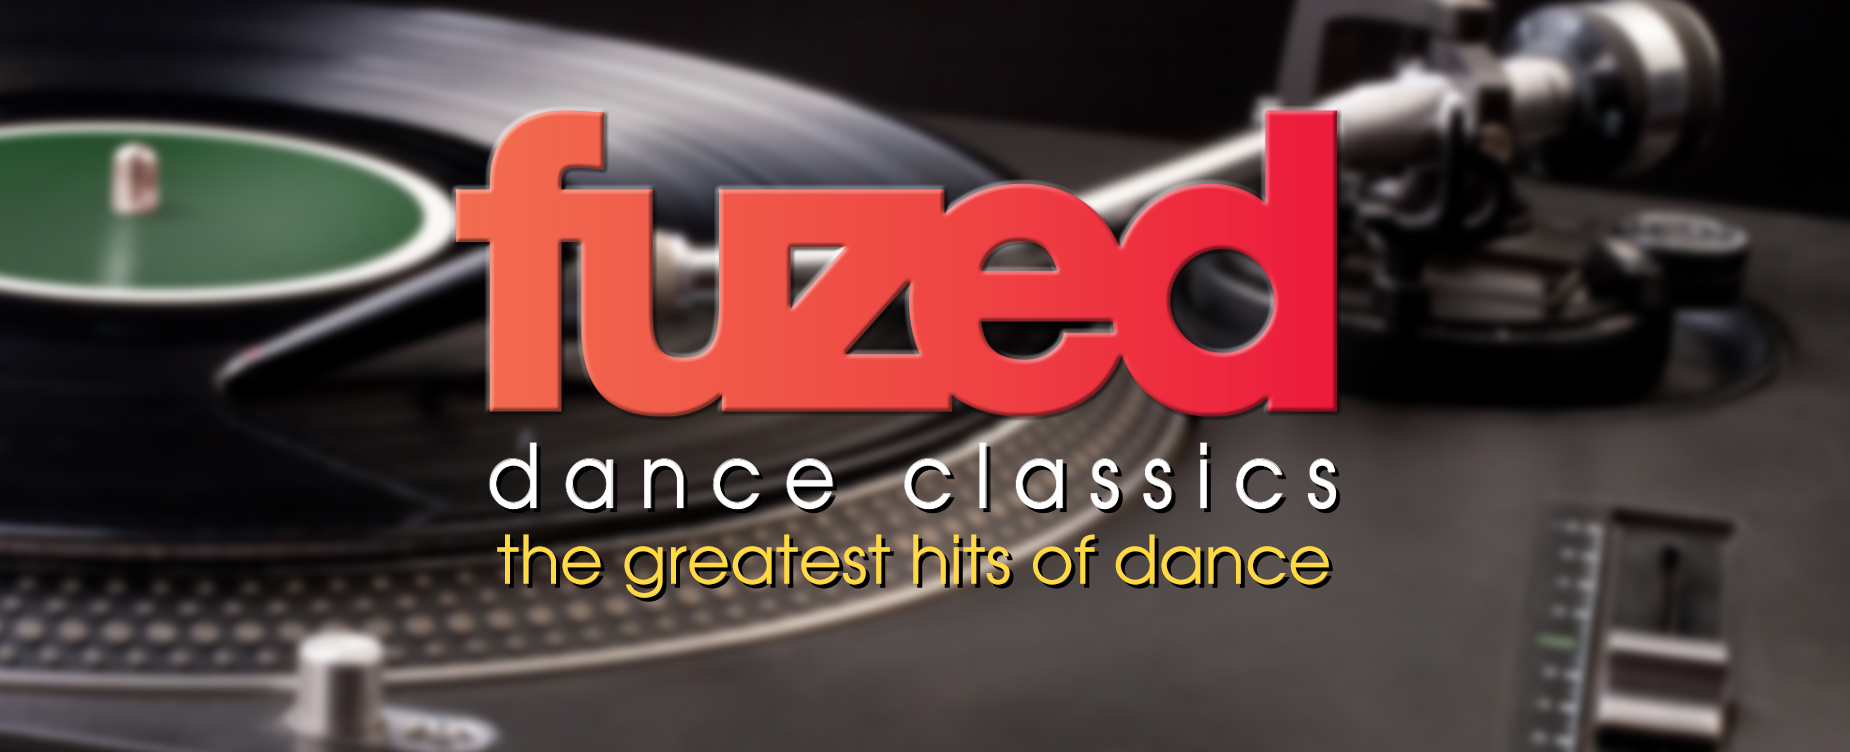 Fuzed Dance Classic Banner